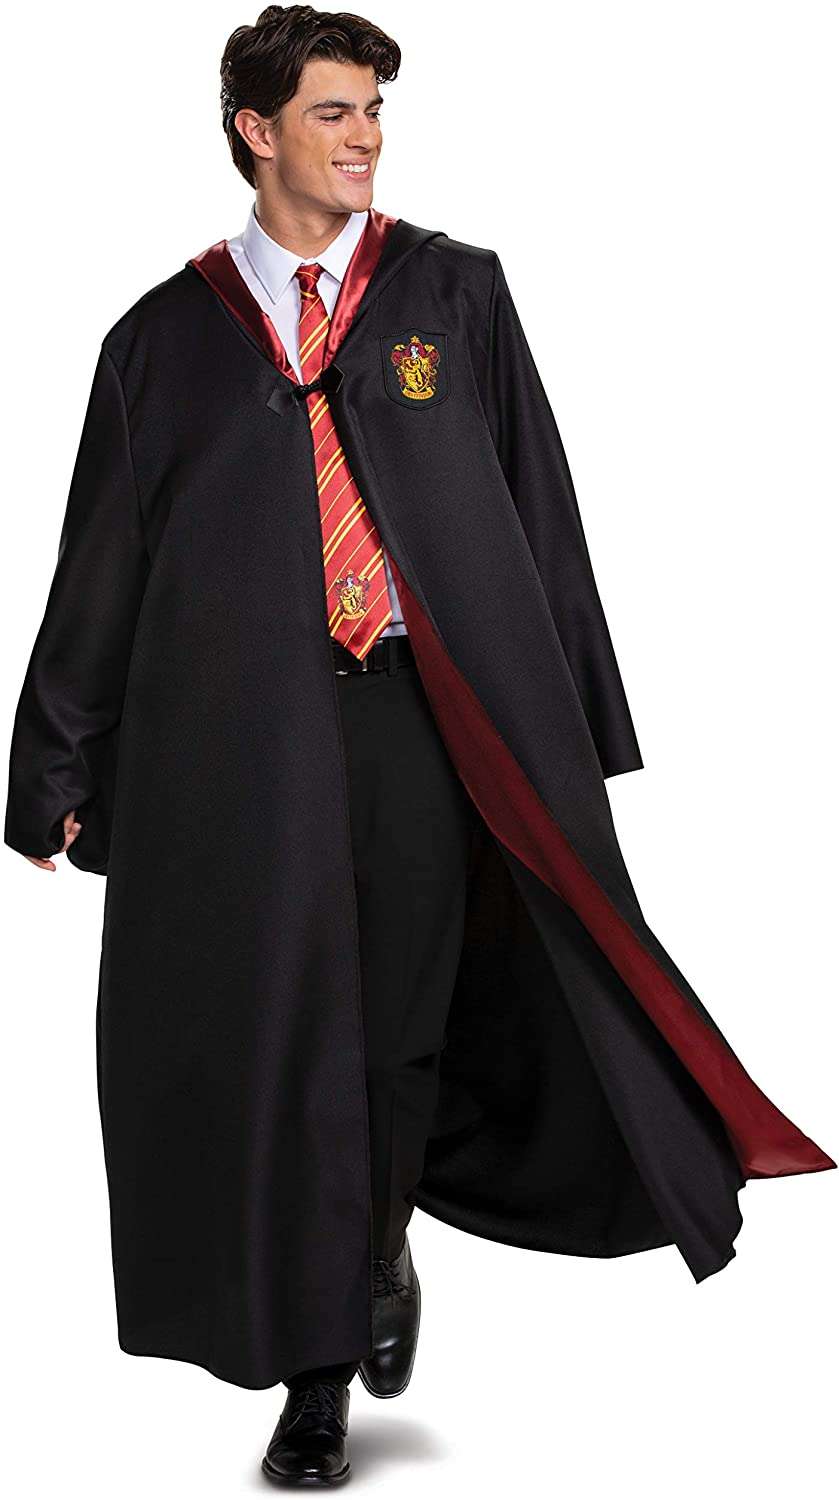 Amazon.com: Harry Potter Robe, Deluxe Wizarding World ...